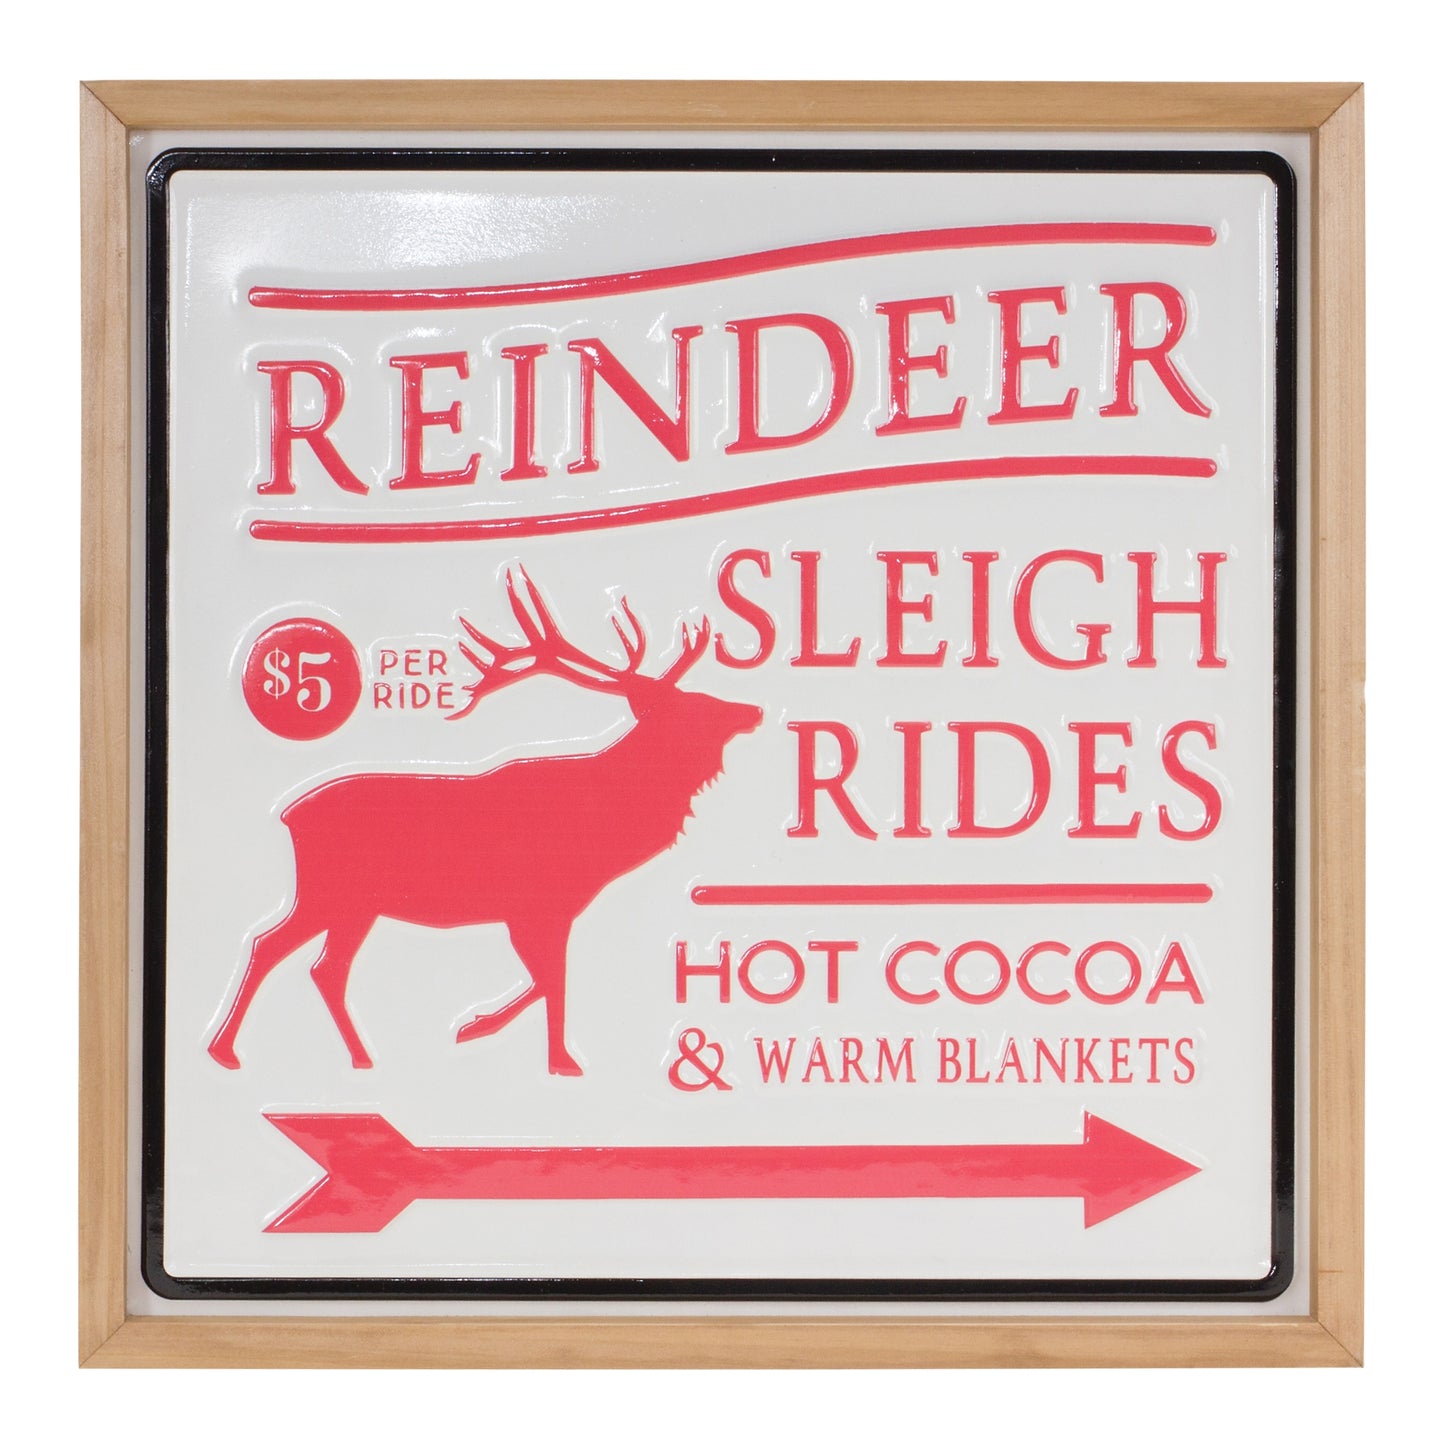 Reindeer/Sleigh Rides Wall Sign